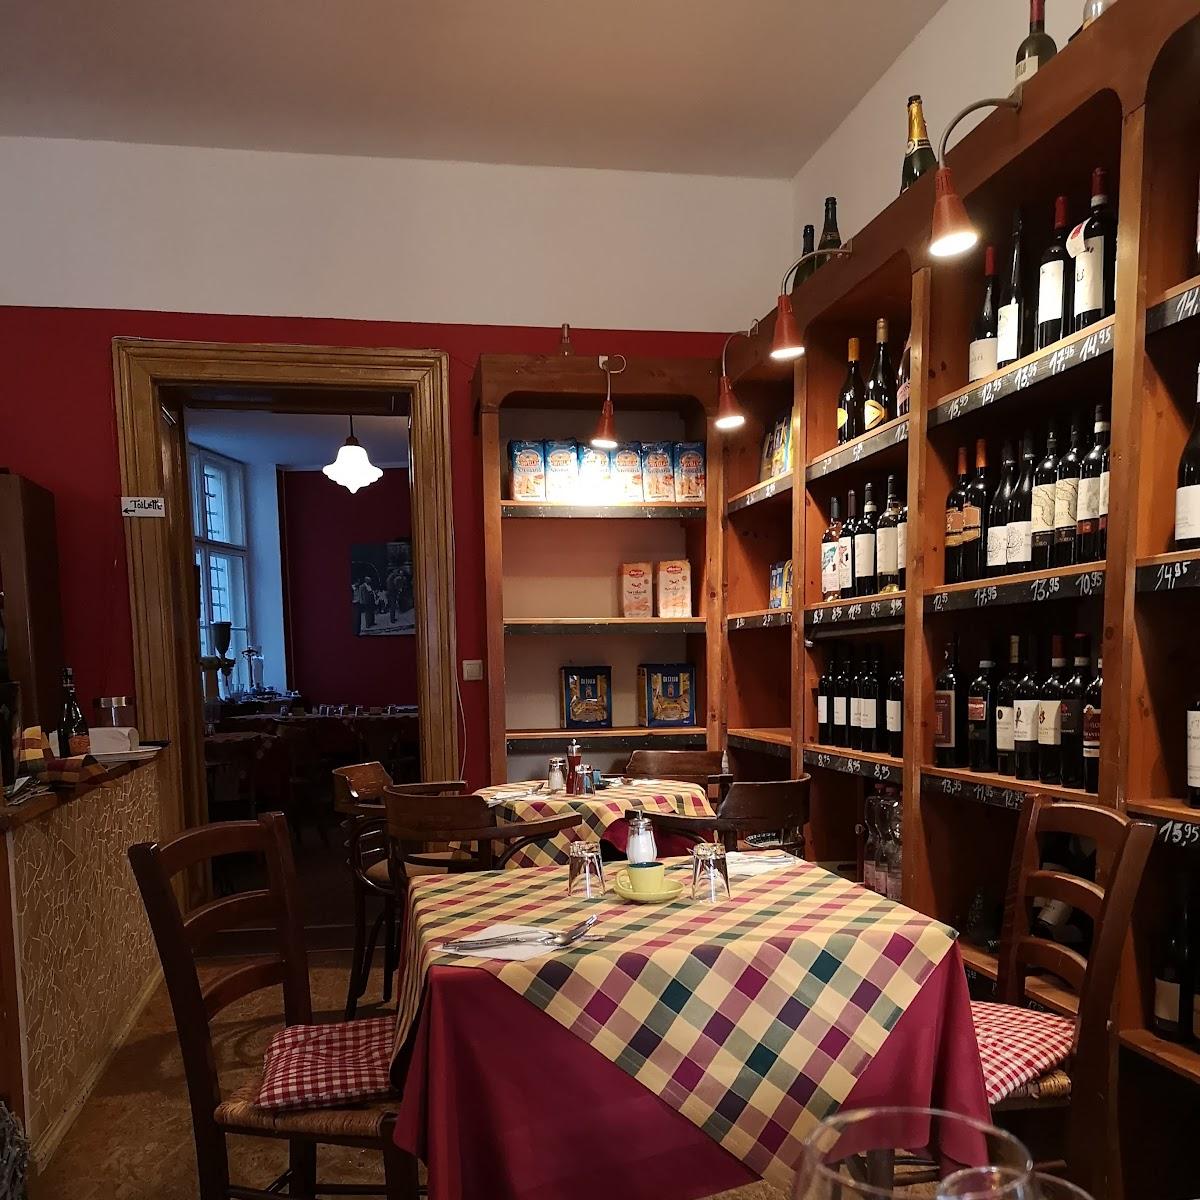 Restaurant "Vini e Salumi" in Berlin